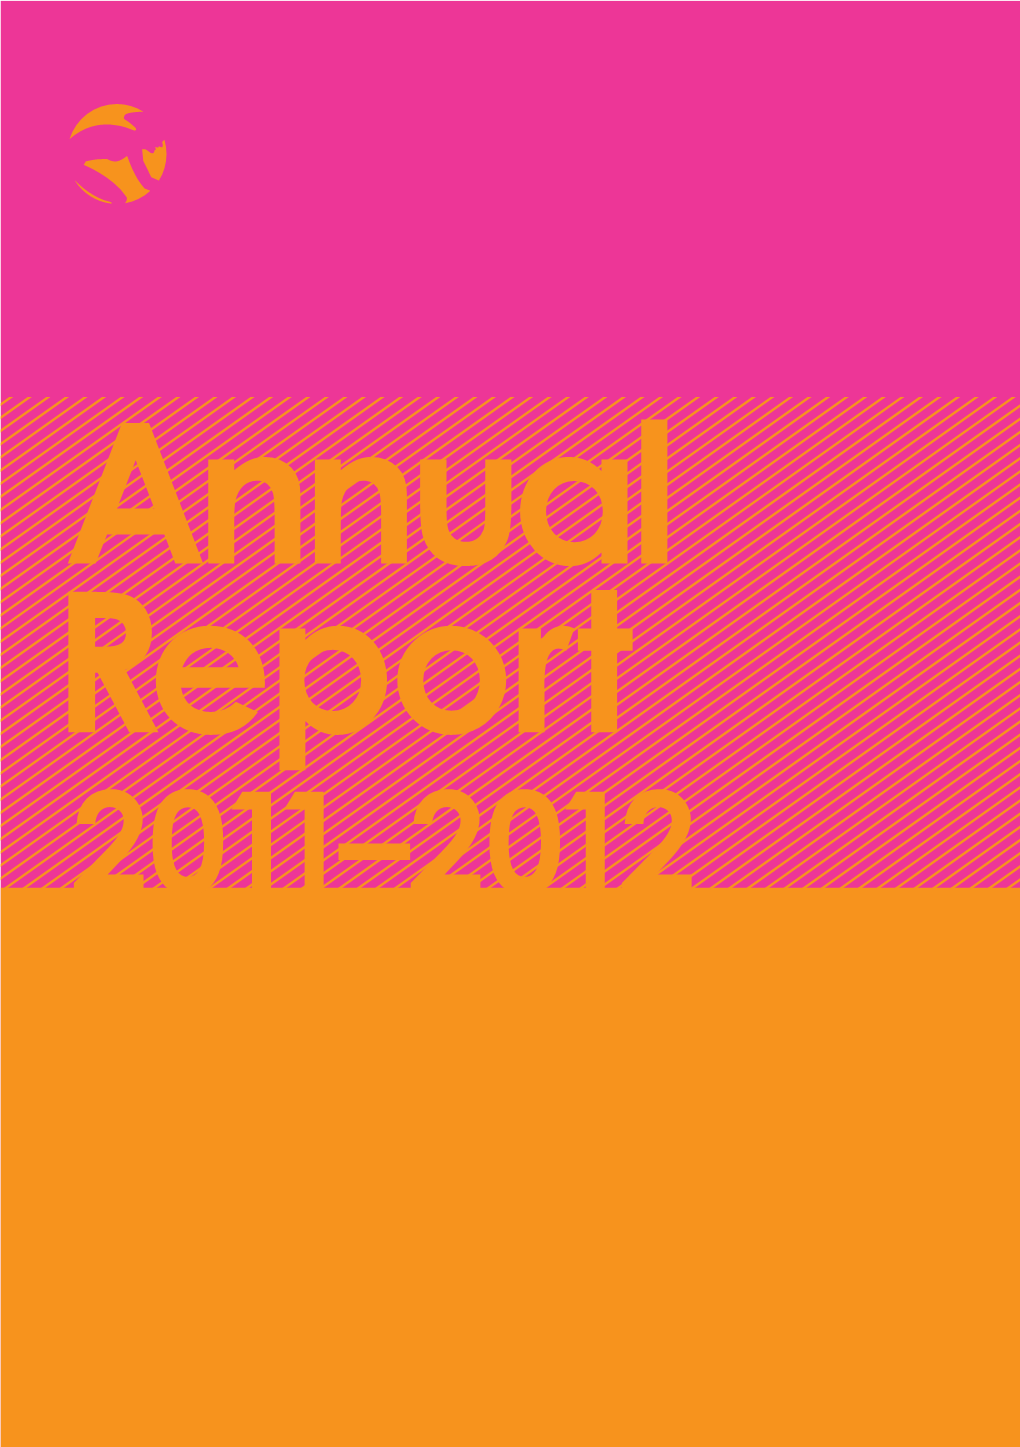 AGF-Annual-Report-2011-2012.Pdf